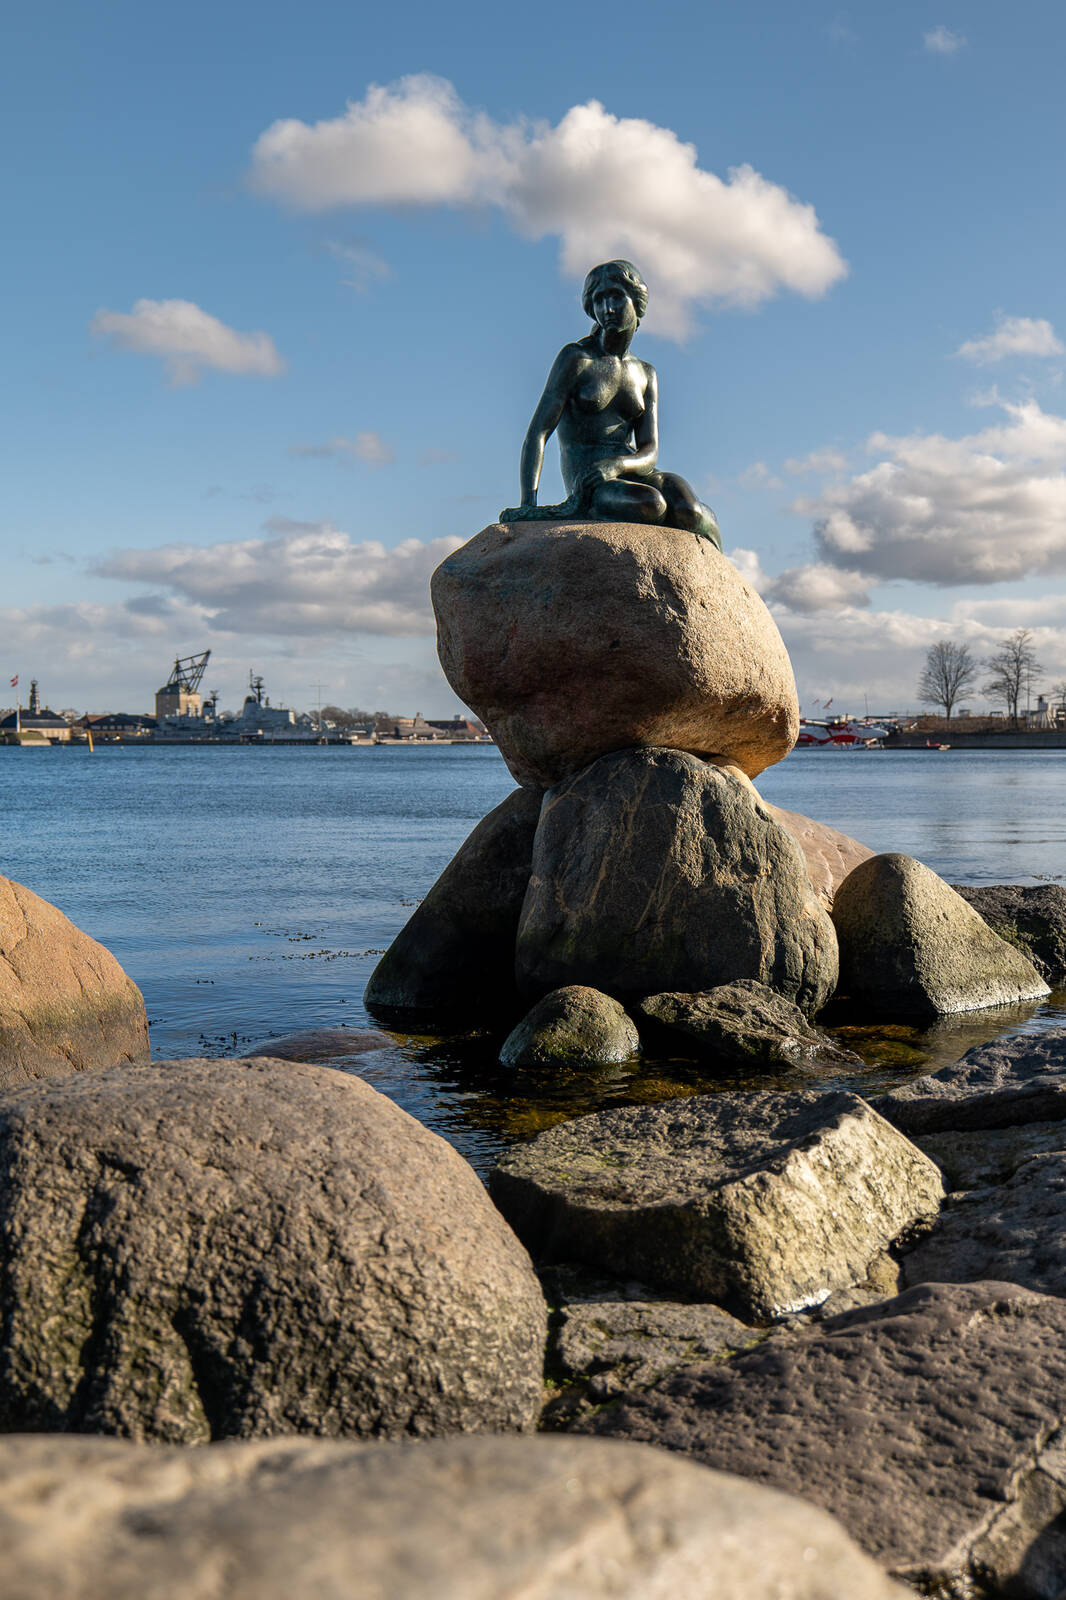 Image of Lille Havfrue (Little Mermaid) - København by Richard Davies